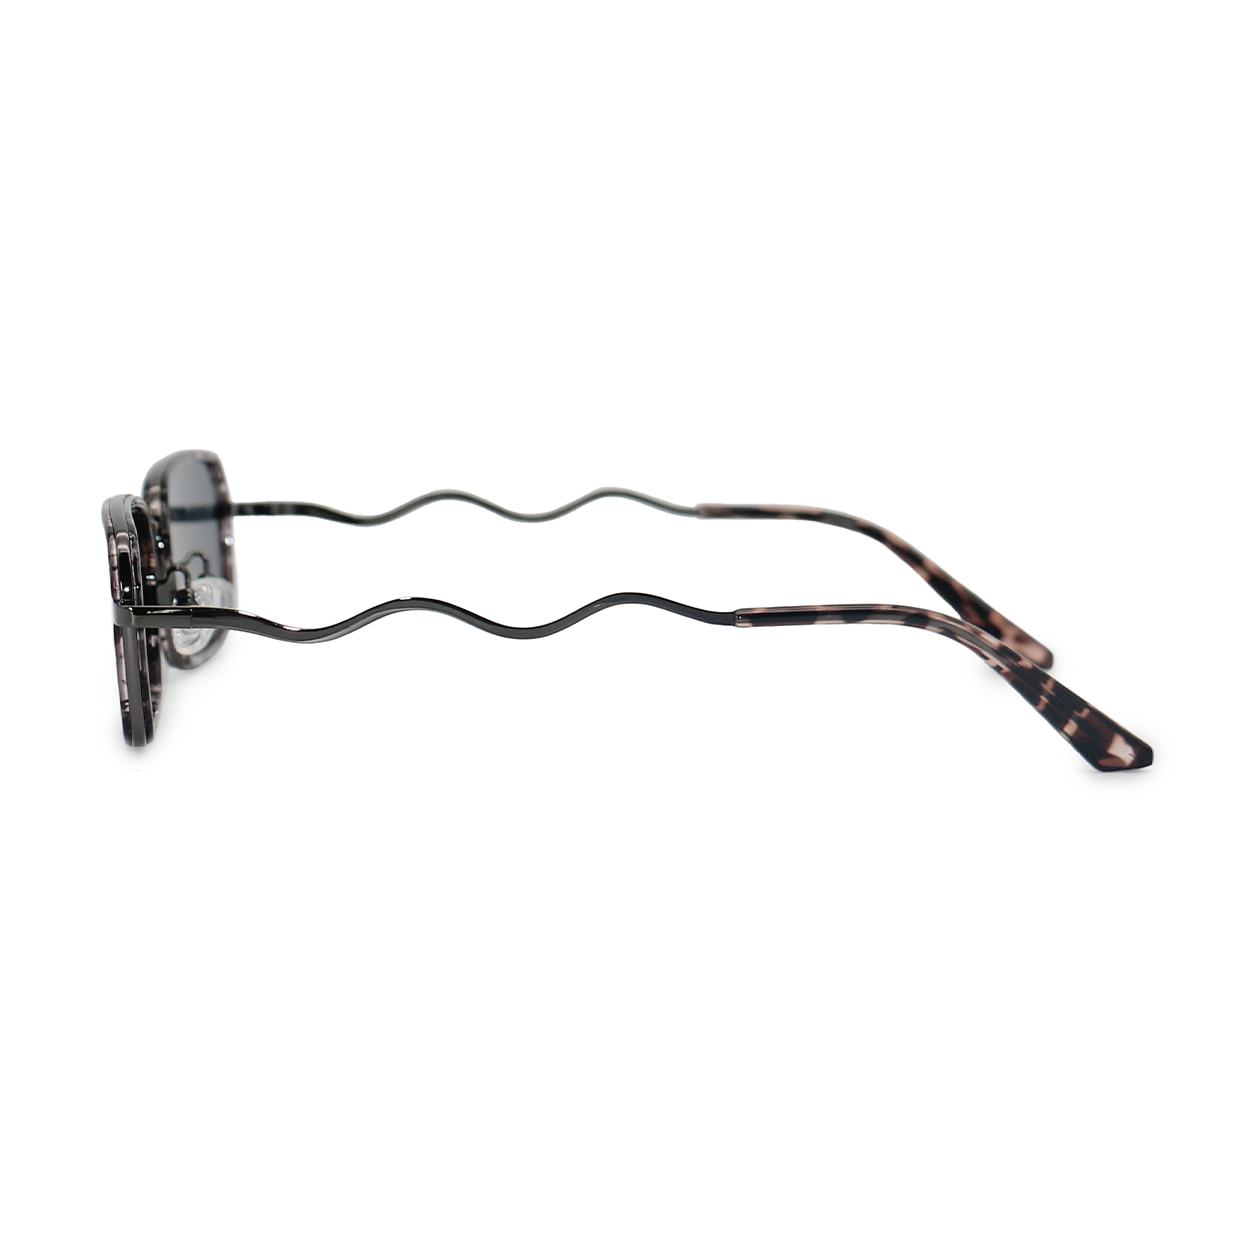 TopFoxx - EVE Black - Rectangular Sunglasses for Women - Side Profile - Wavy Arms